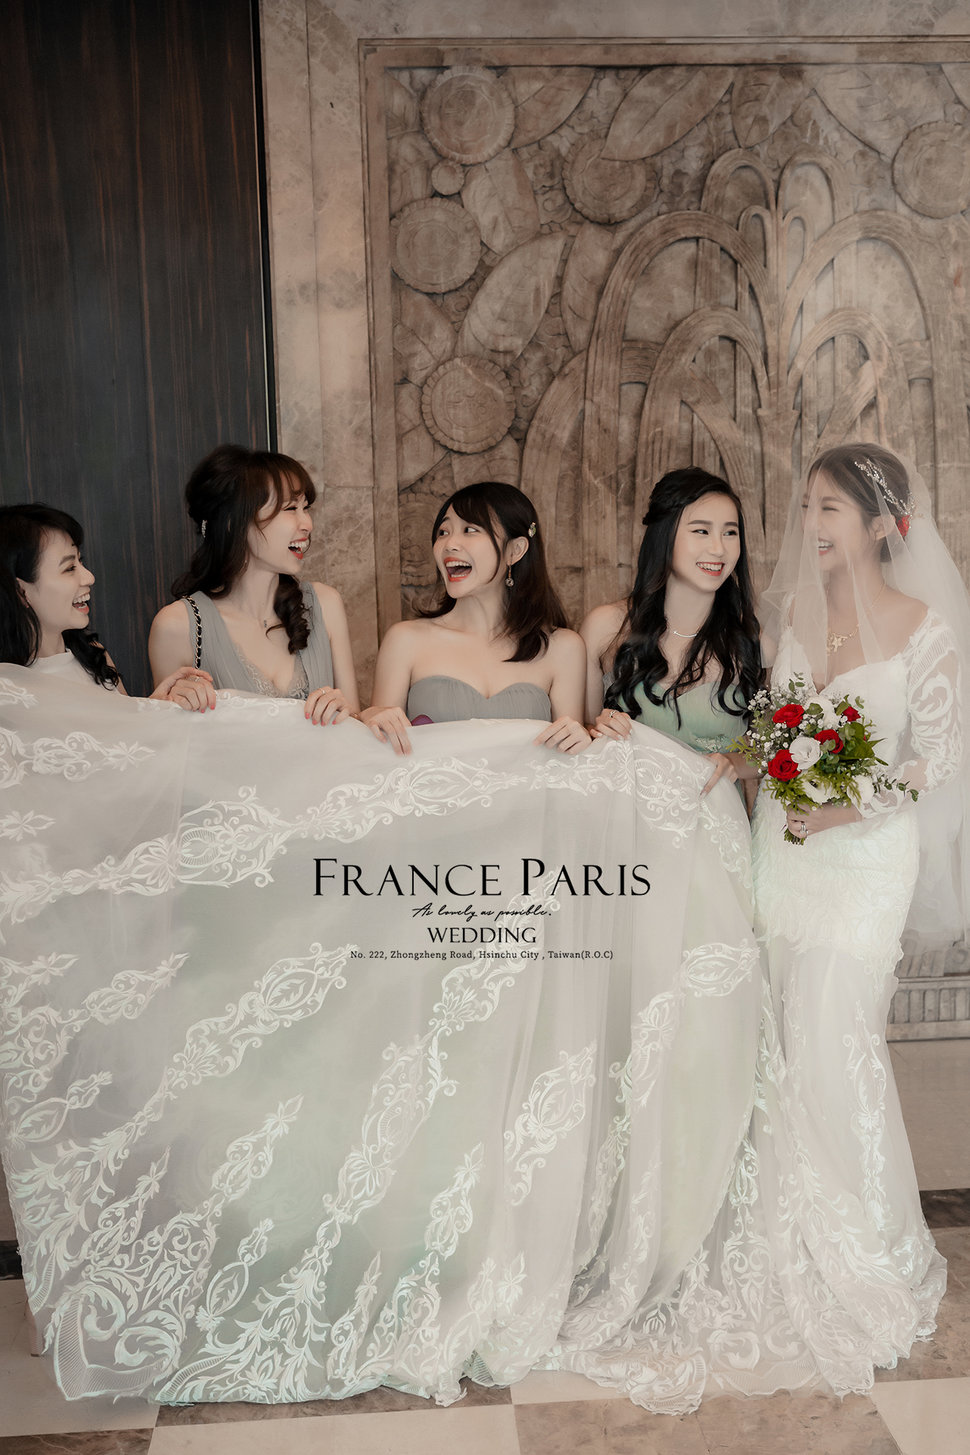 _DSC4883 - 新竹法國巴黎婚紗《結婚吧》